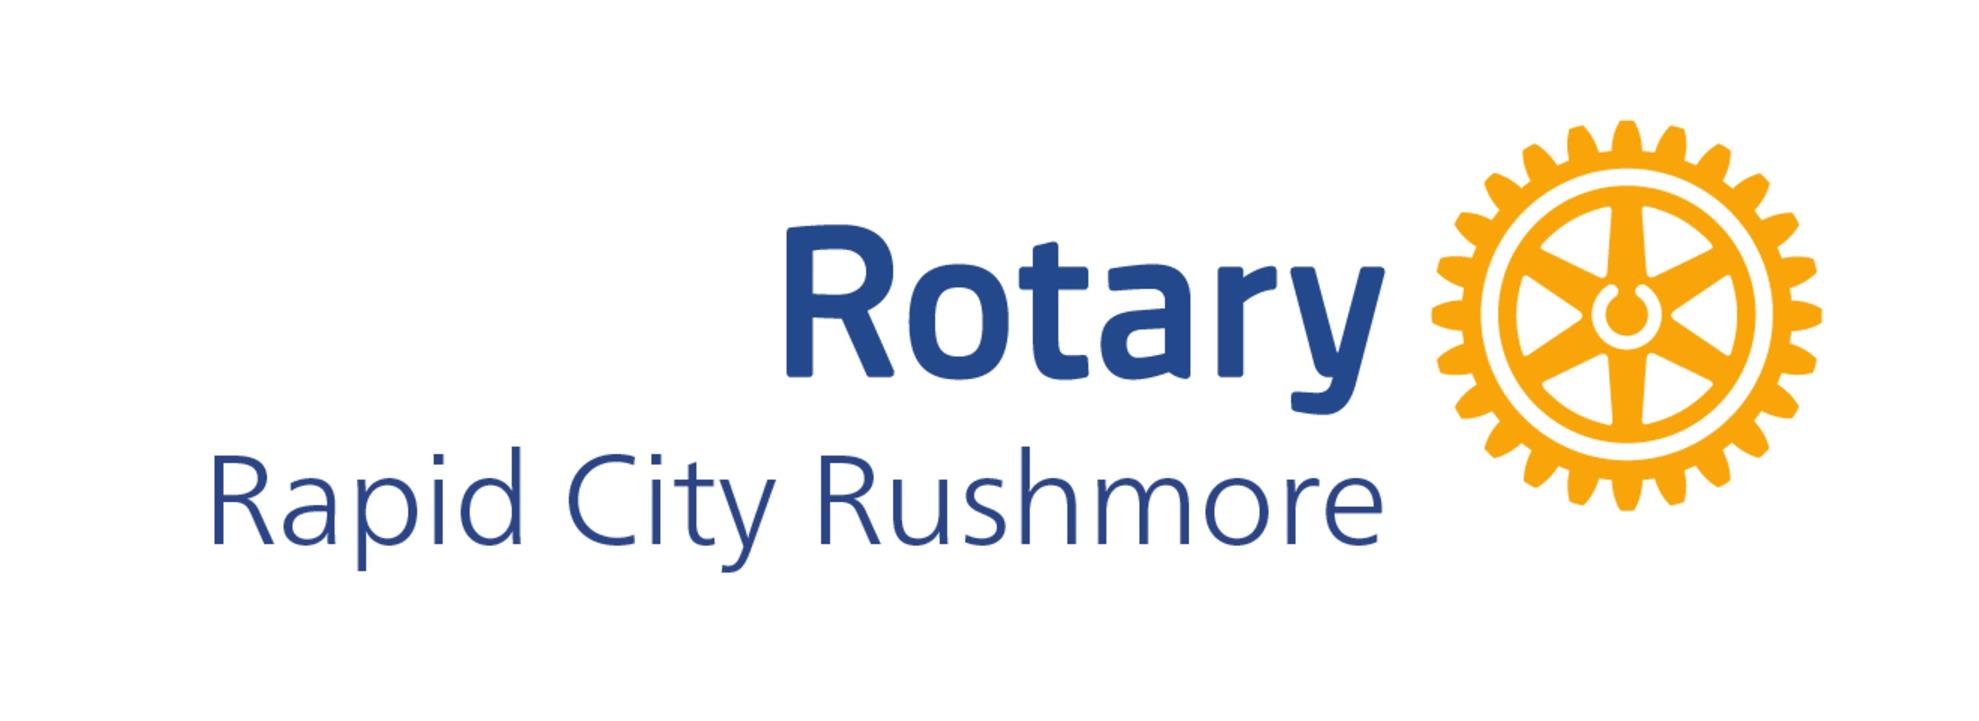 Rapid City Rushmore logo